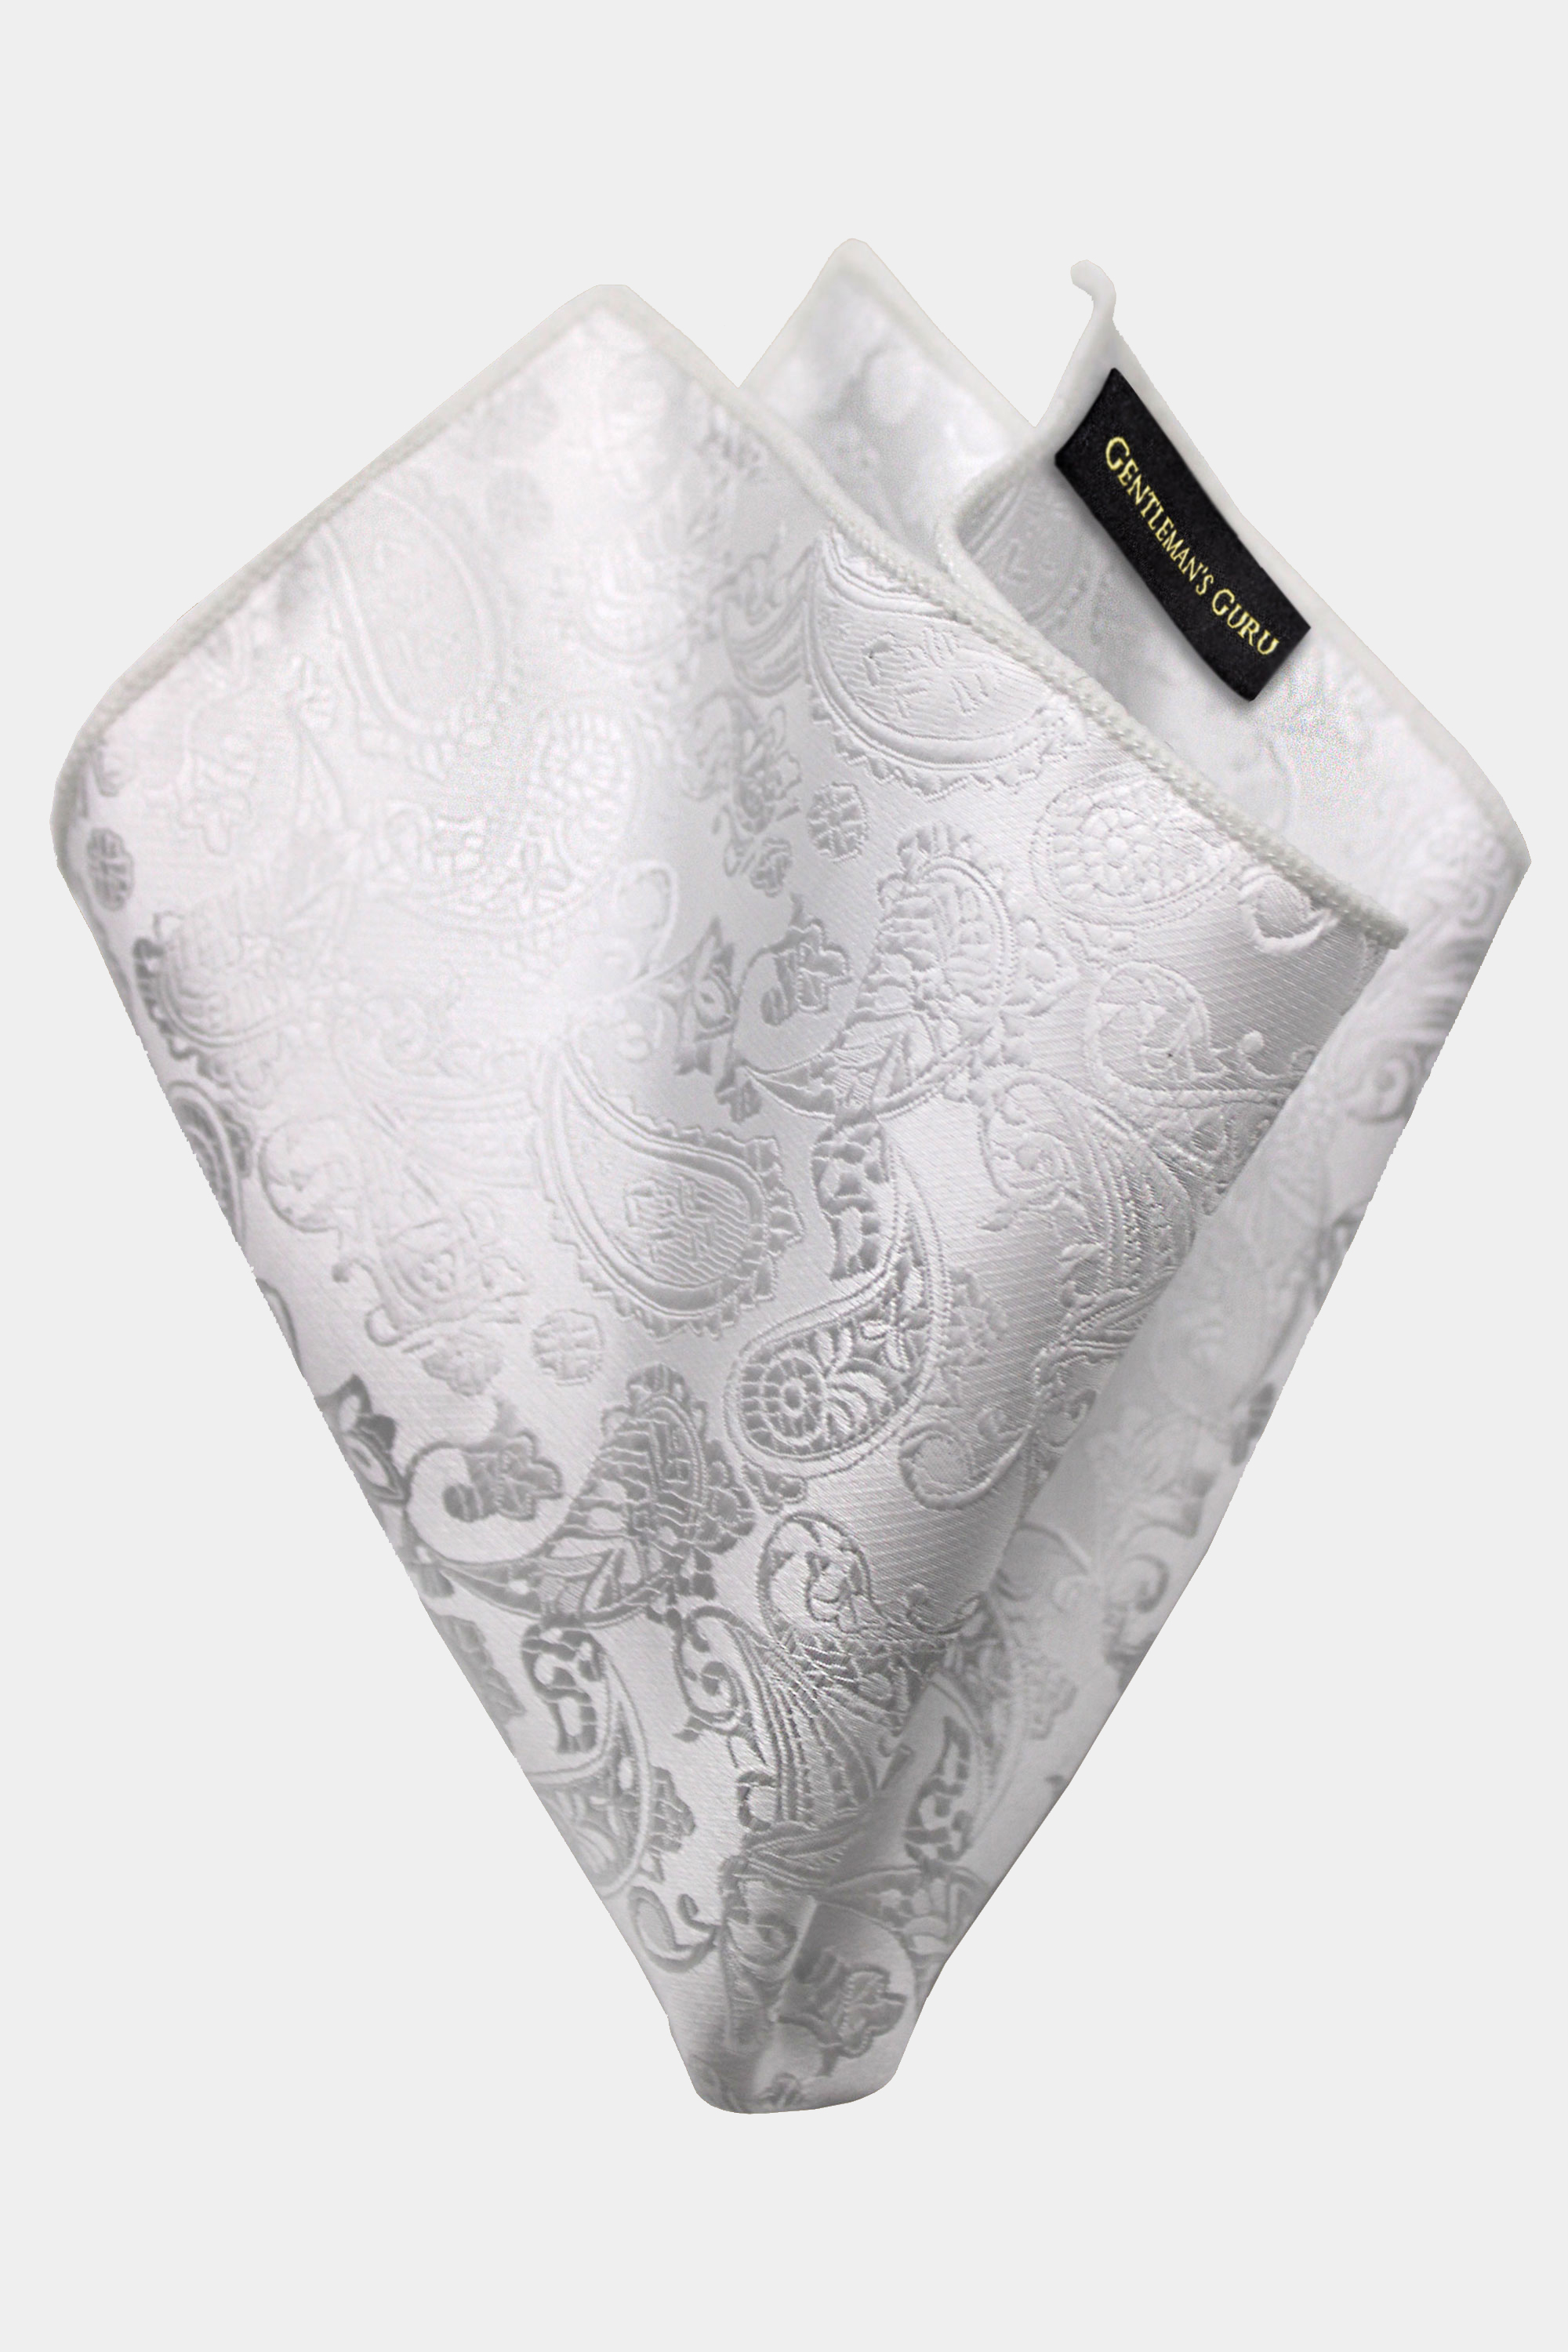 White-Paisley-Pocket-Square-Handkerchief-from-Gentlemansguru.com_